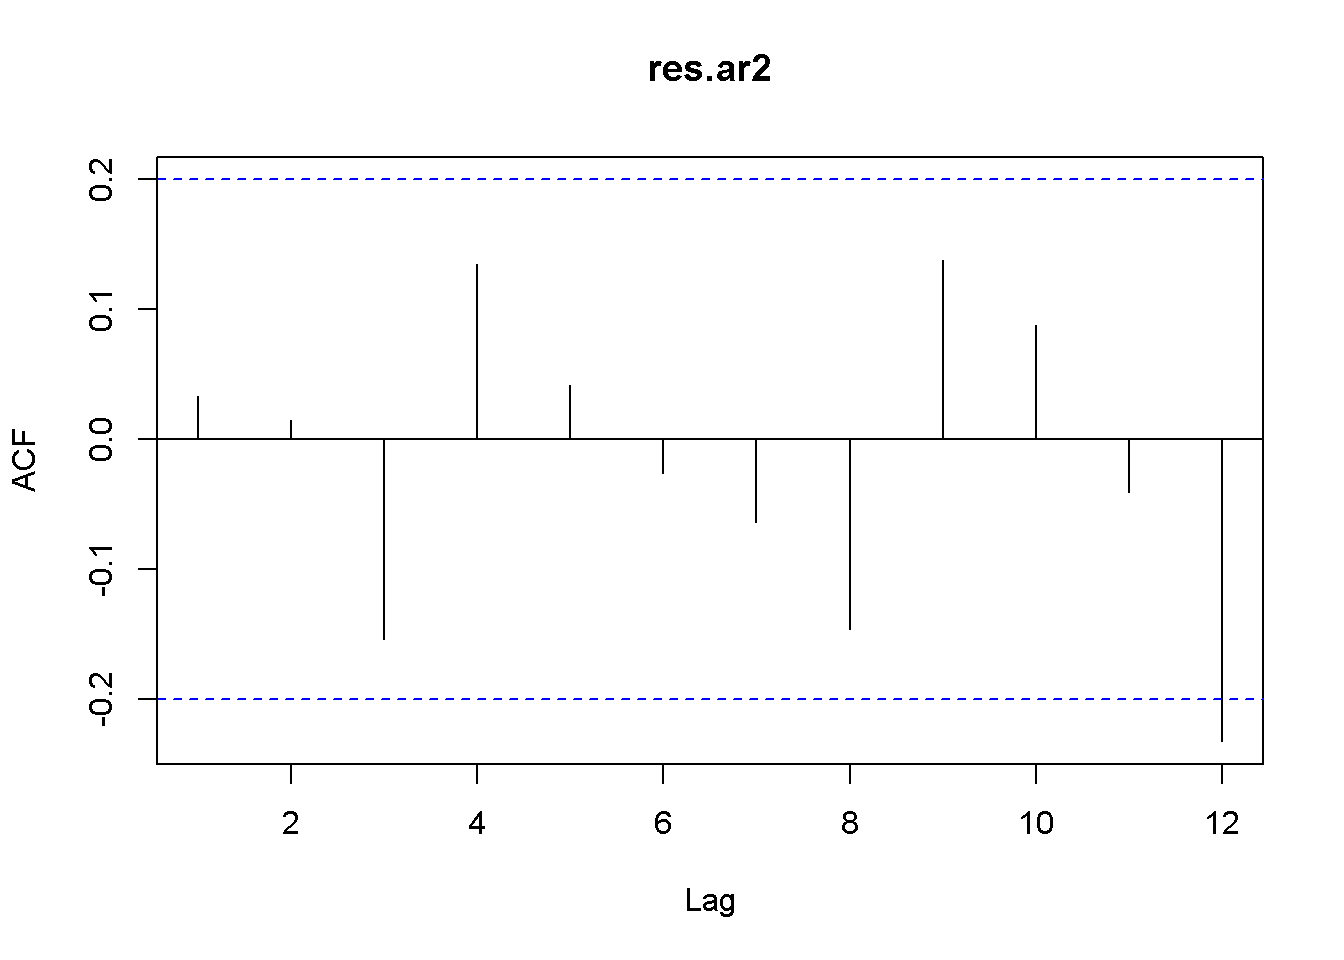 Residual correlogram for US GDP AR(2) model